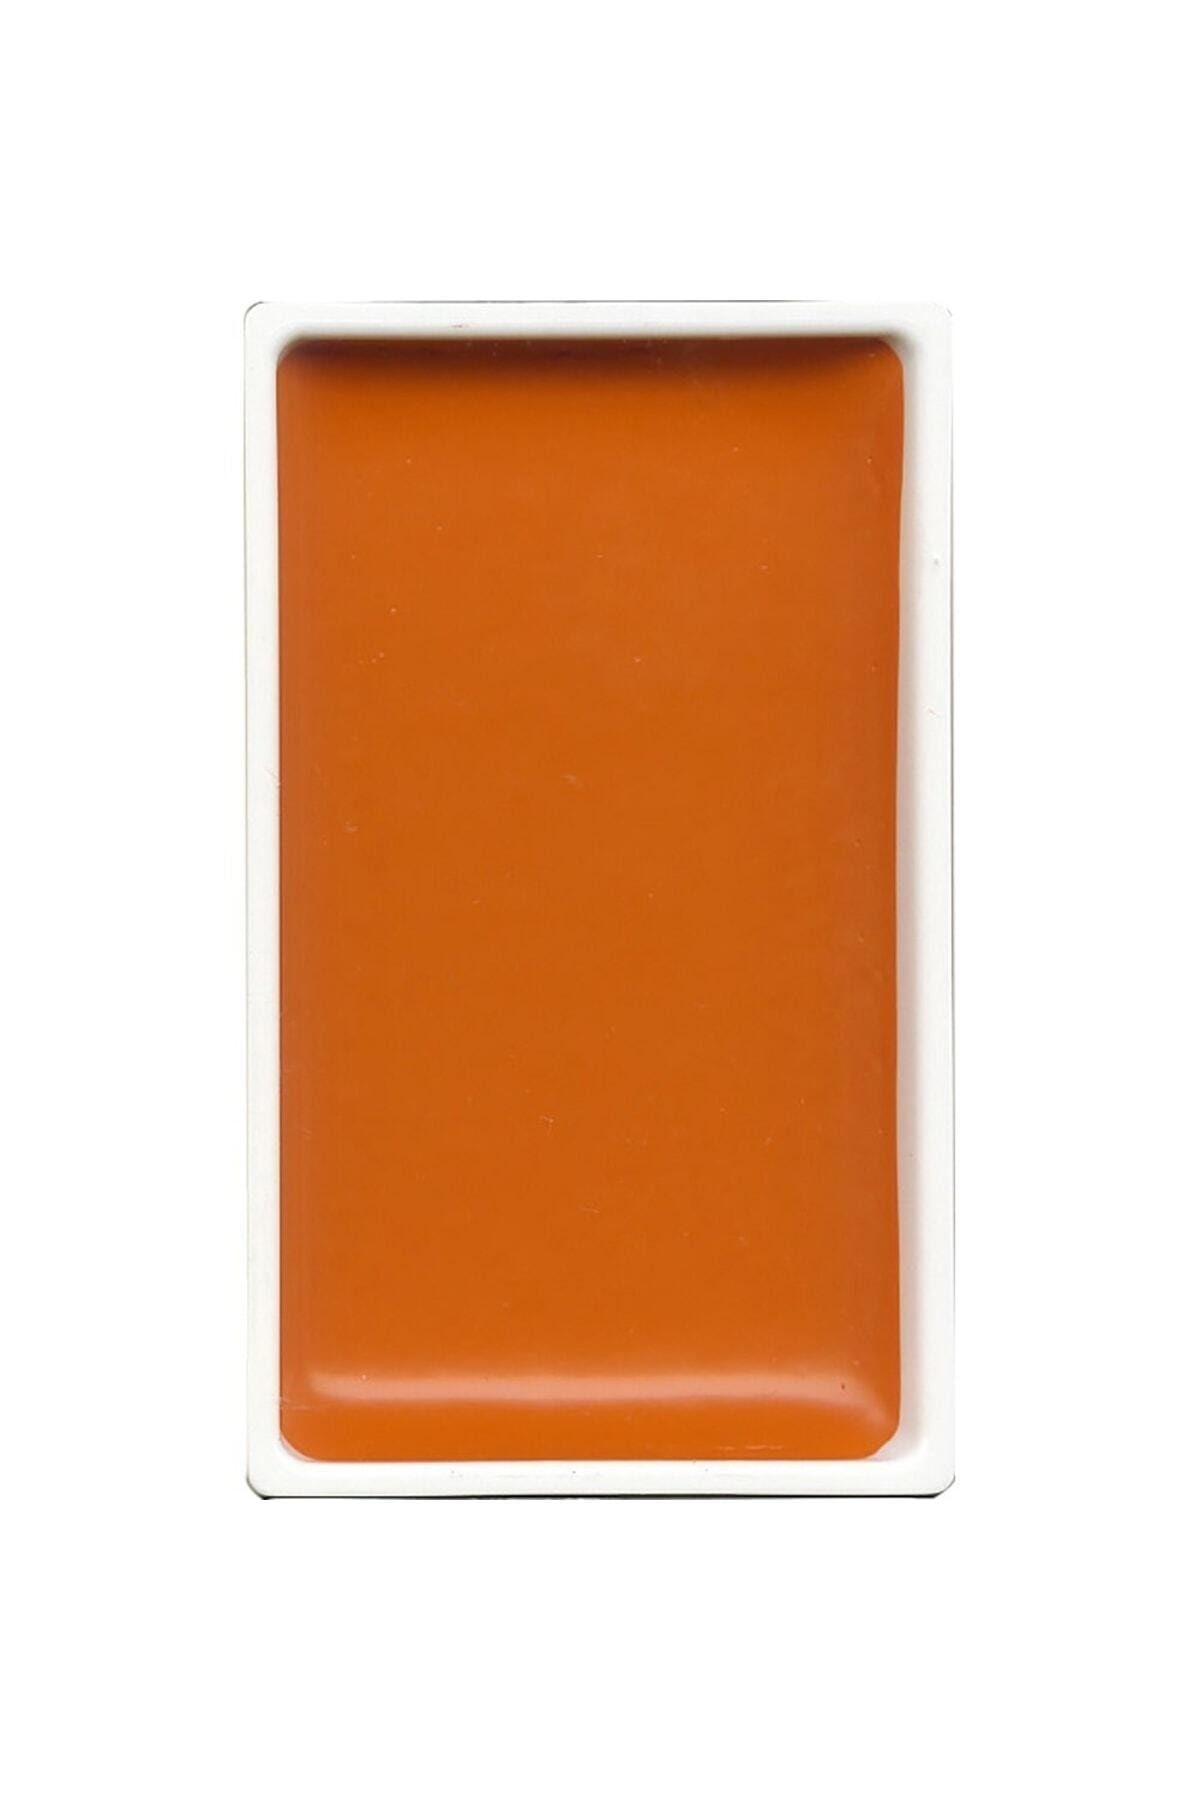 Zig Gansai Tambi Suluboya Tablet No 33 Cadmium Orange